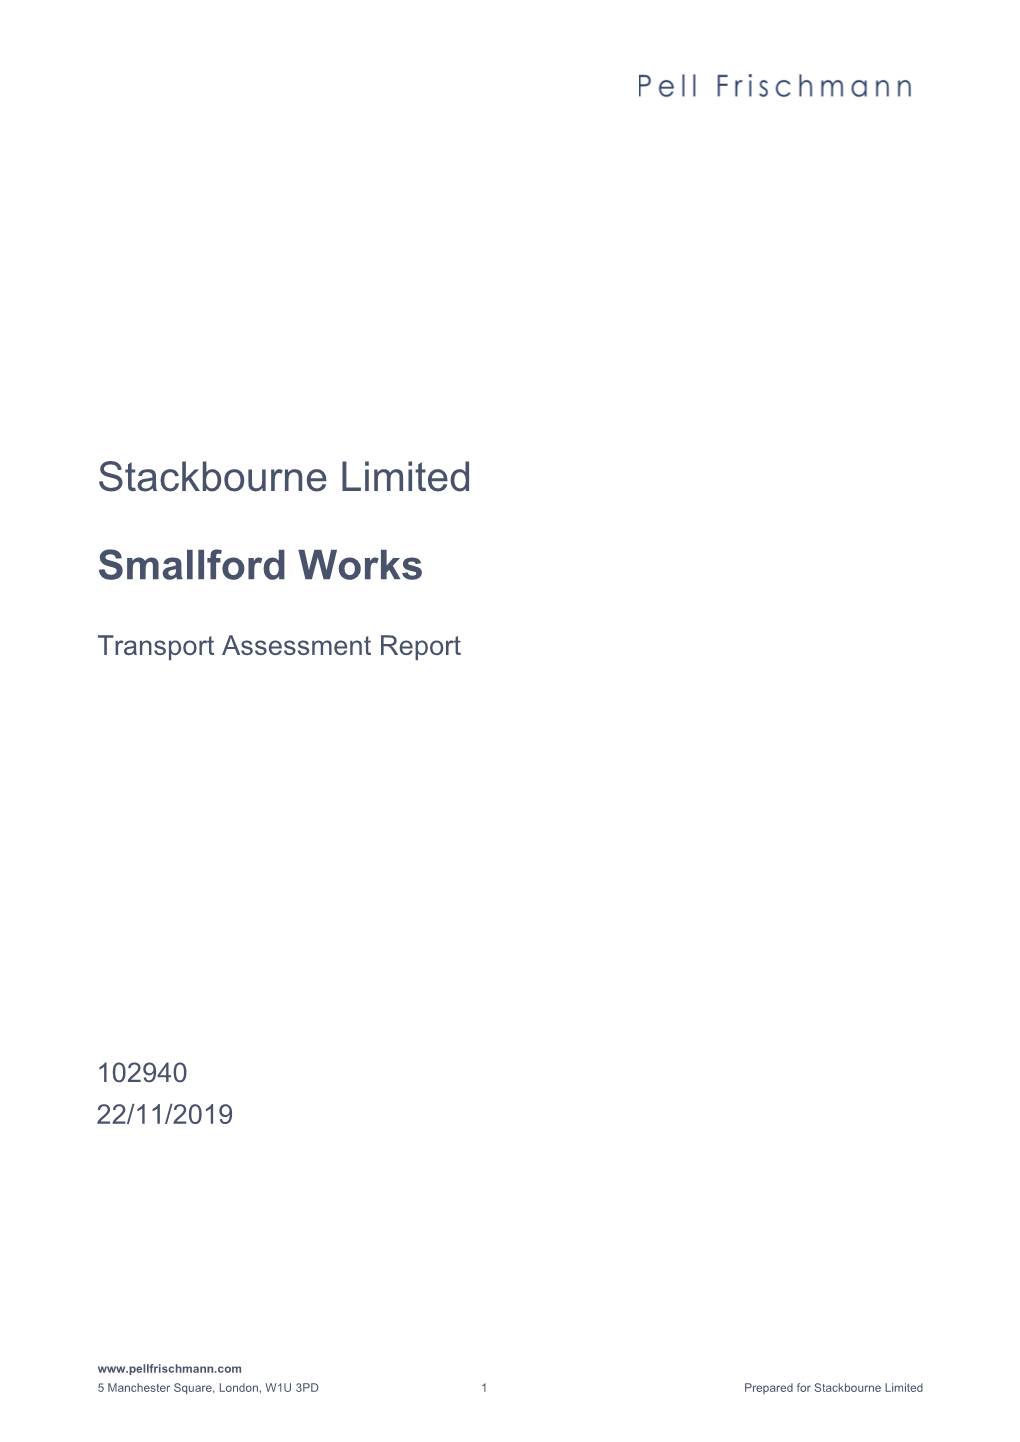 Stackbourne Limited Smallford Works Transport Assessment Report